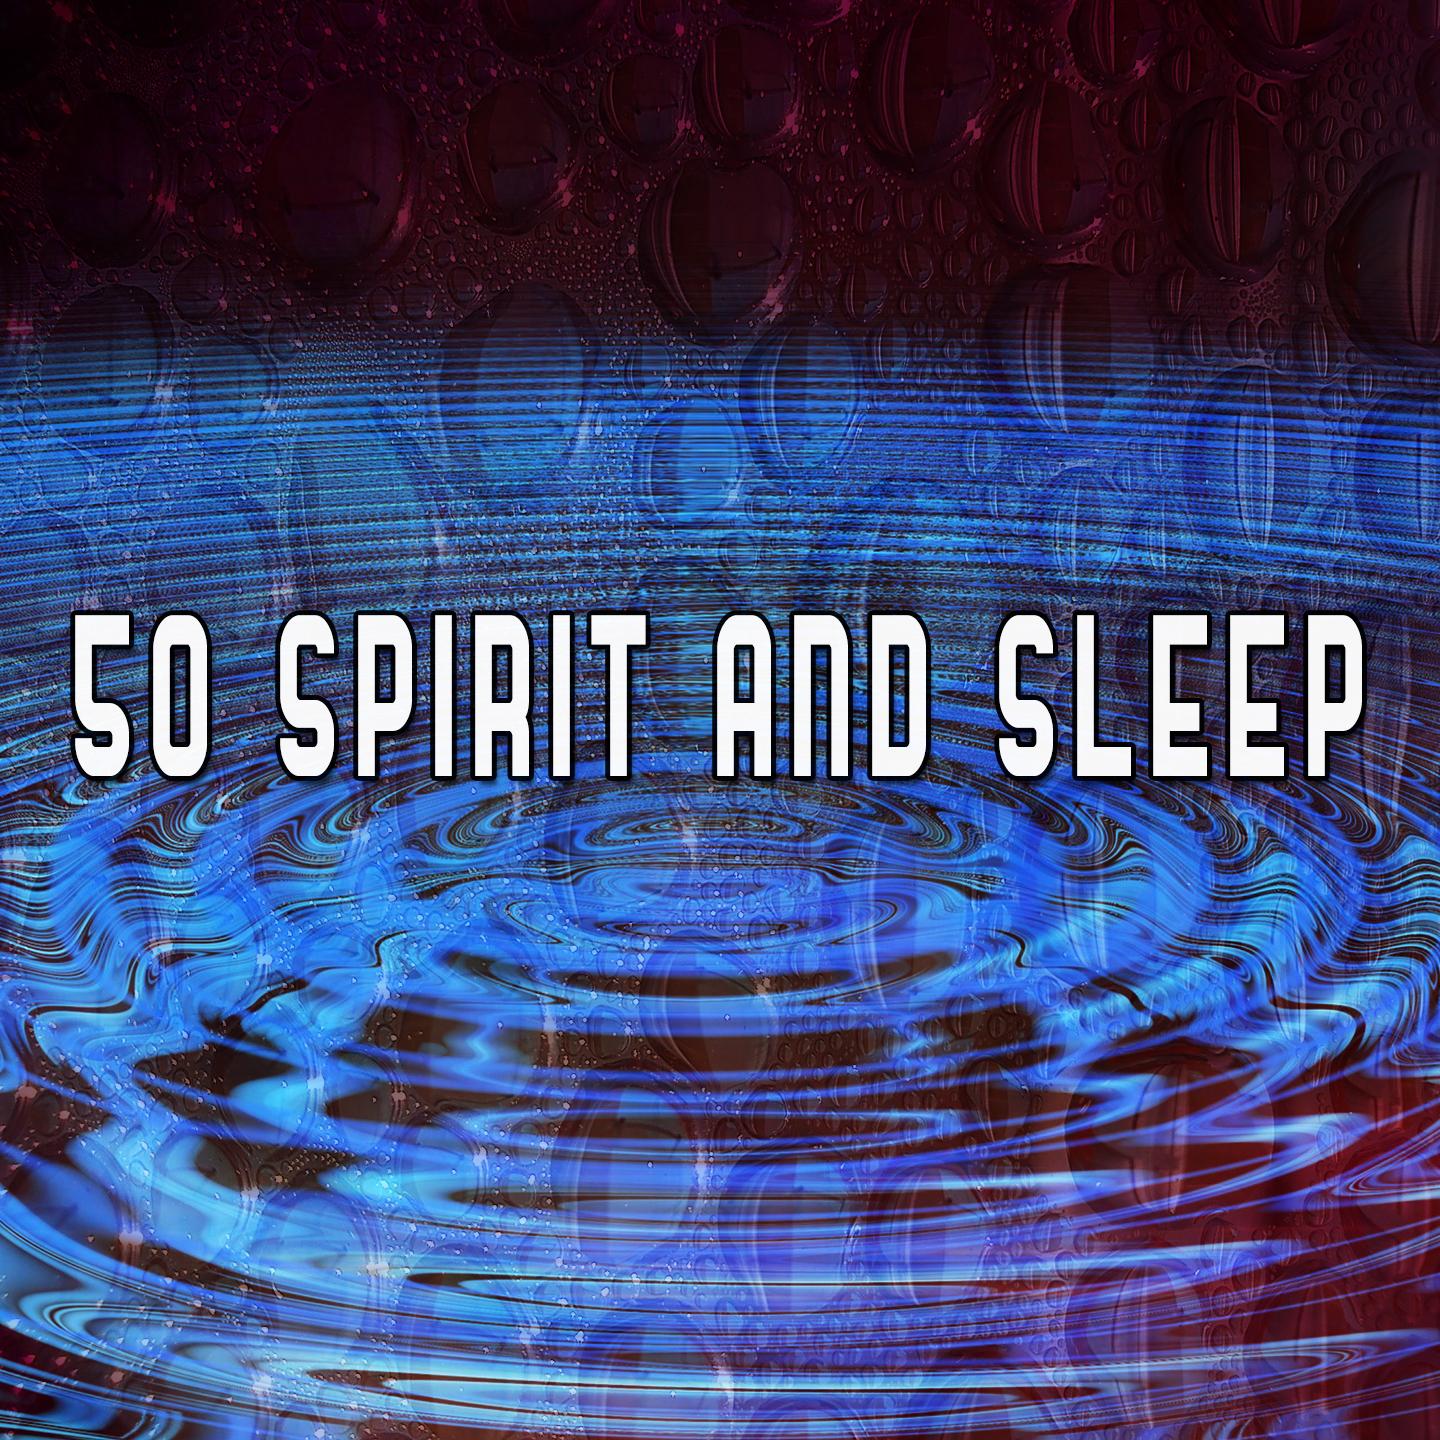 50 Spirit and Sleep